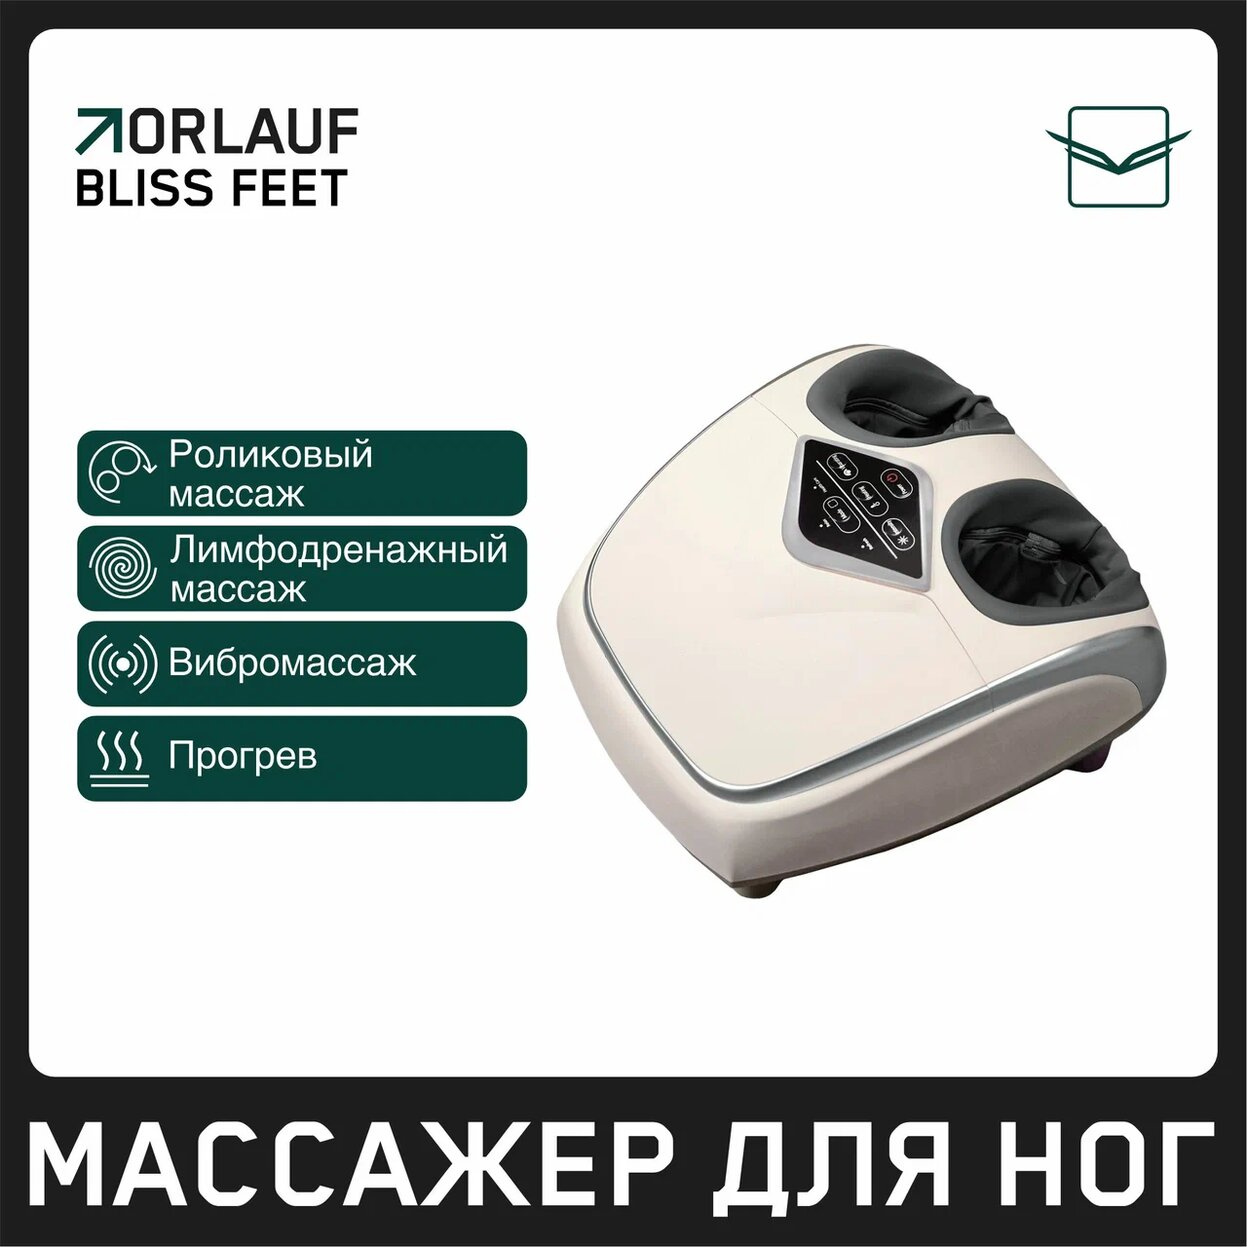 Orlauf Bliss Feet из каталога массажеров в Екатеринбурге по цене 27600 ₽